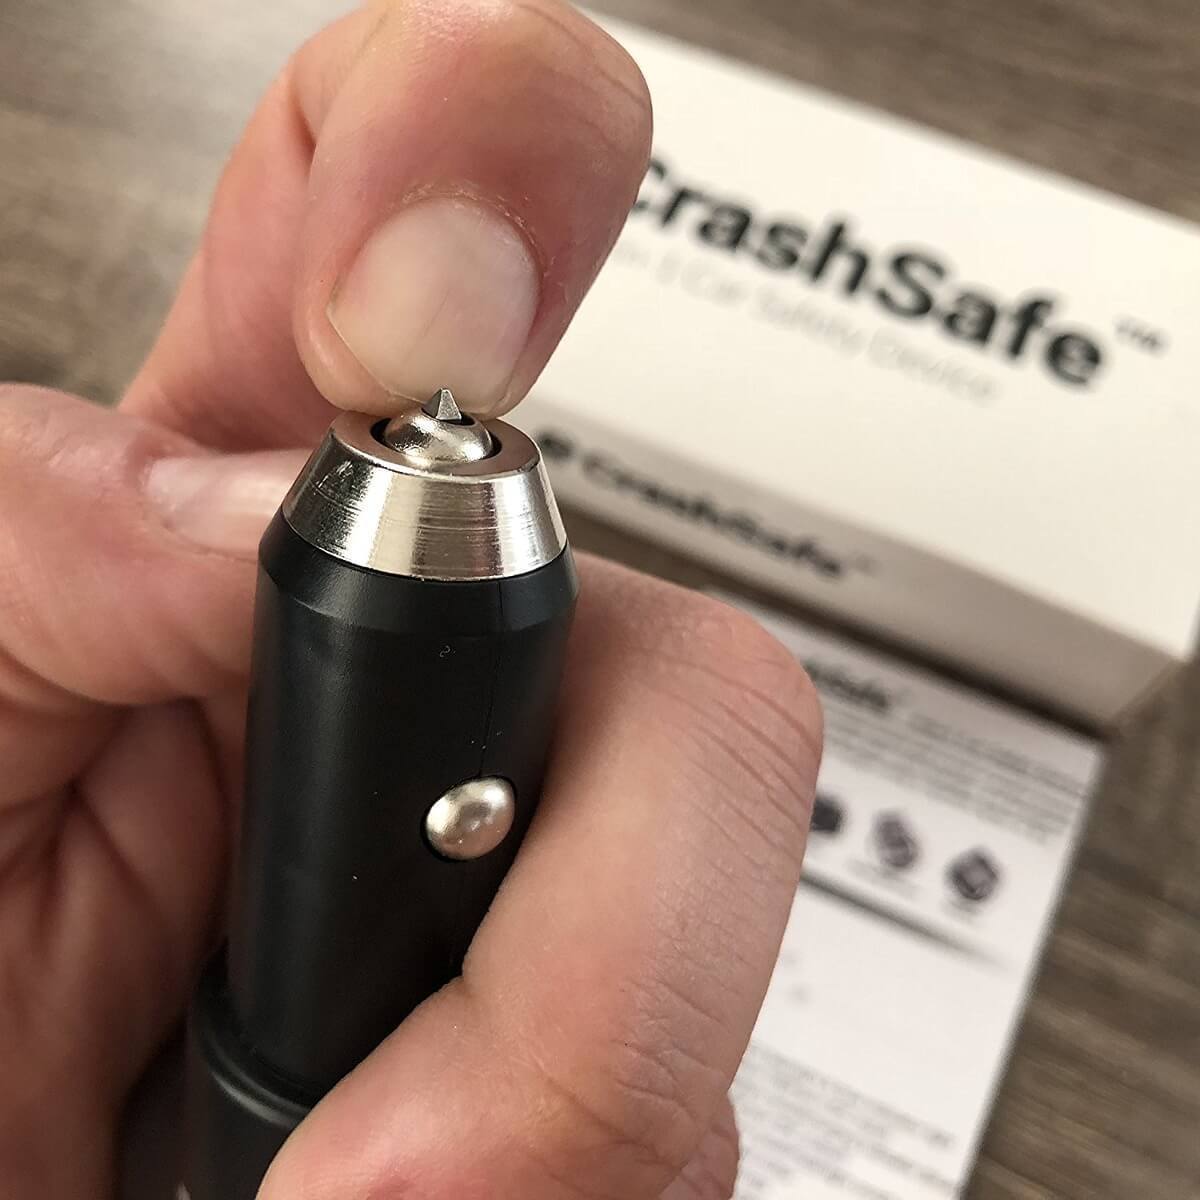 Crash Safe Device